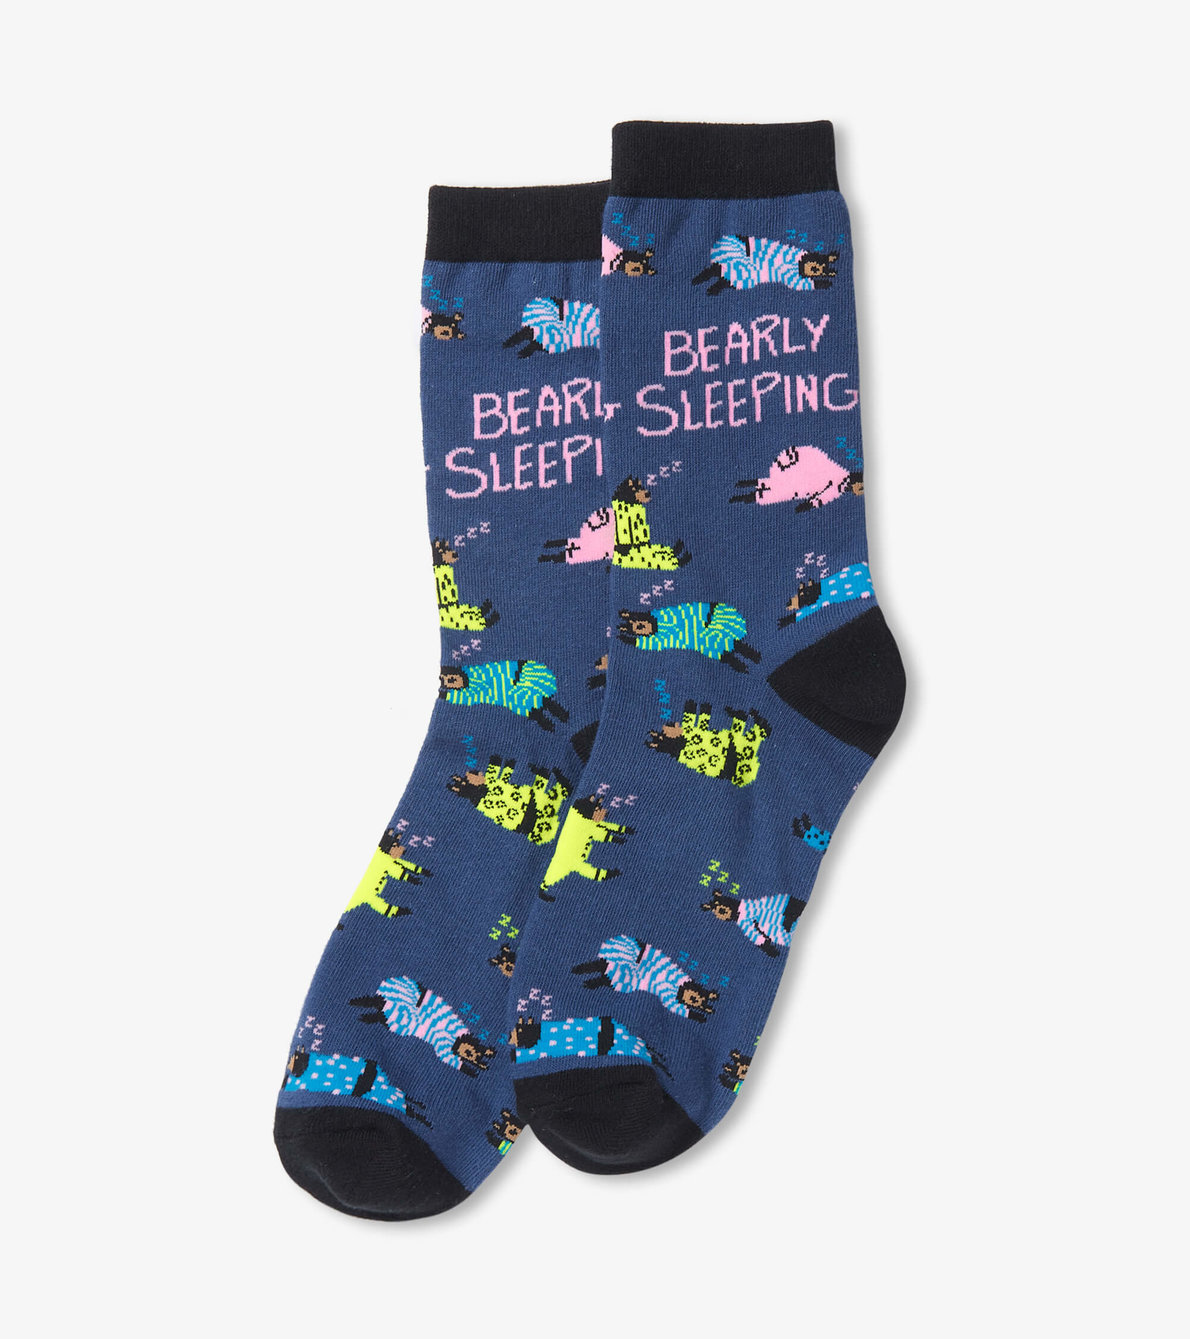 View larger image of Bearly Sleeping Women's Crew Socks